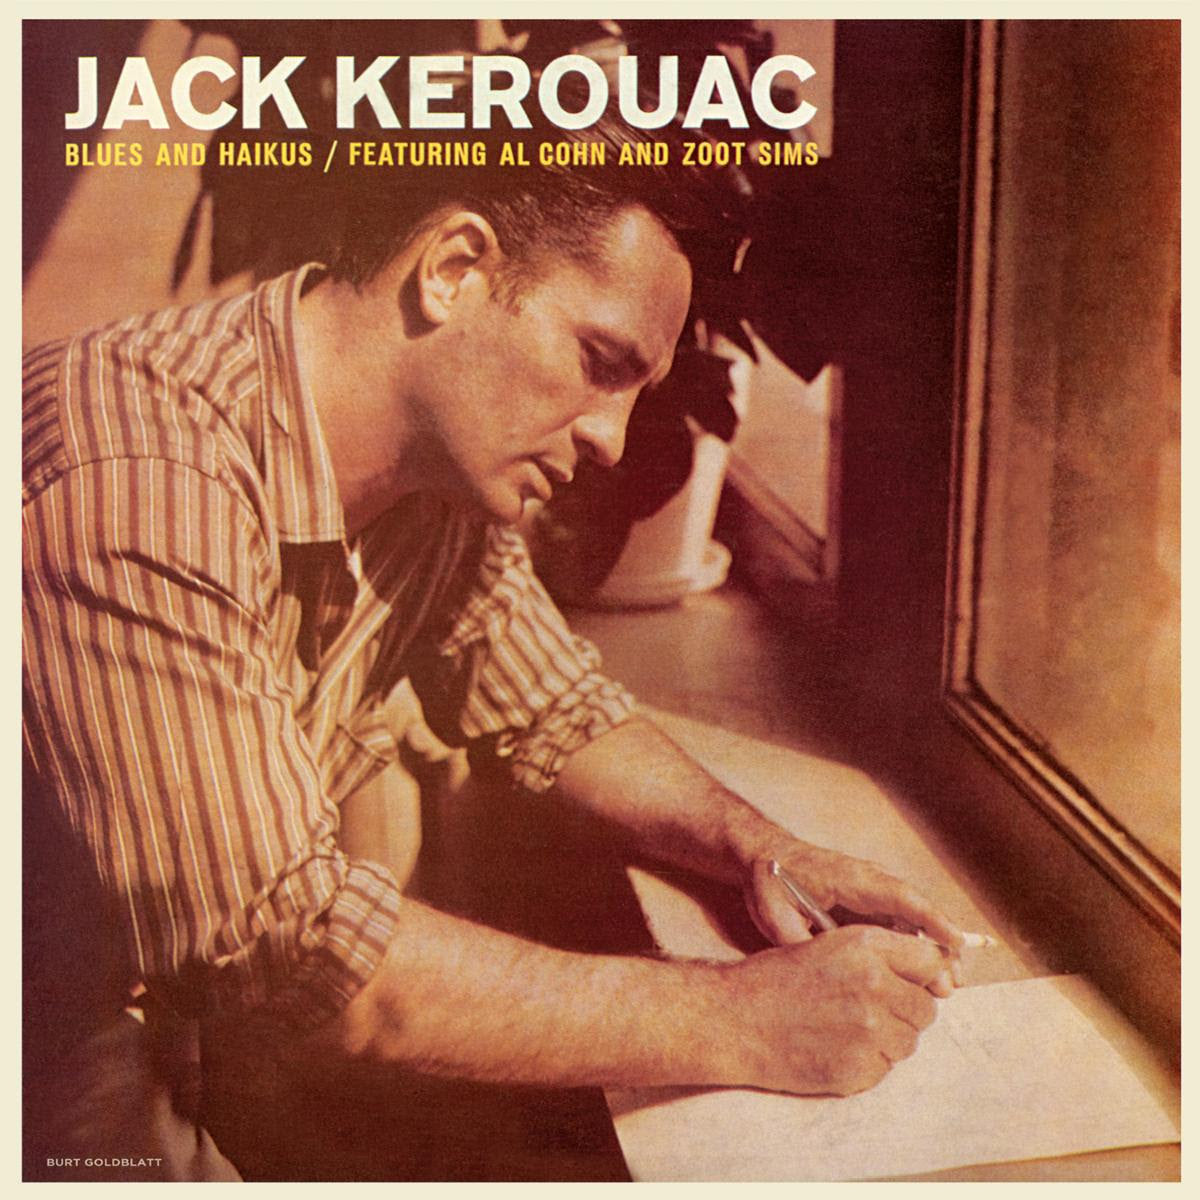 Jack Kerouac Featuring Al Cohn And Zoot Sims ~ Blues And Haikus